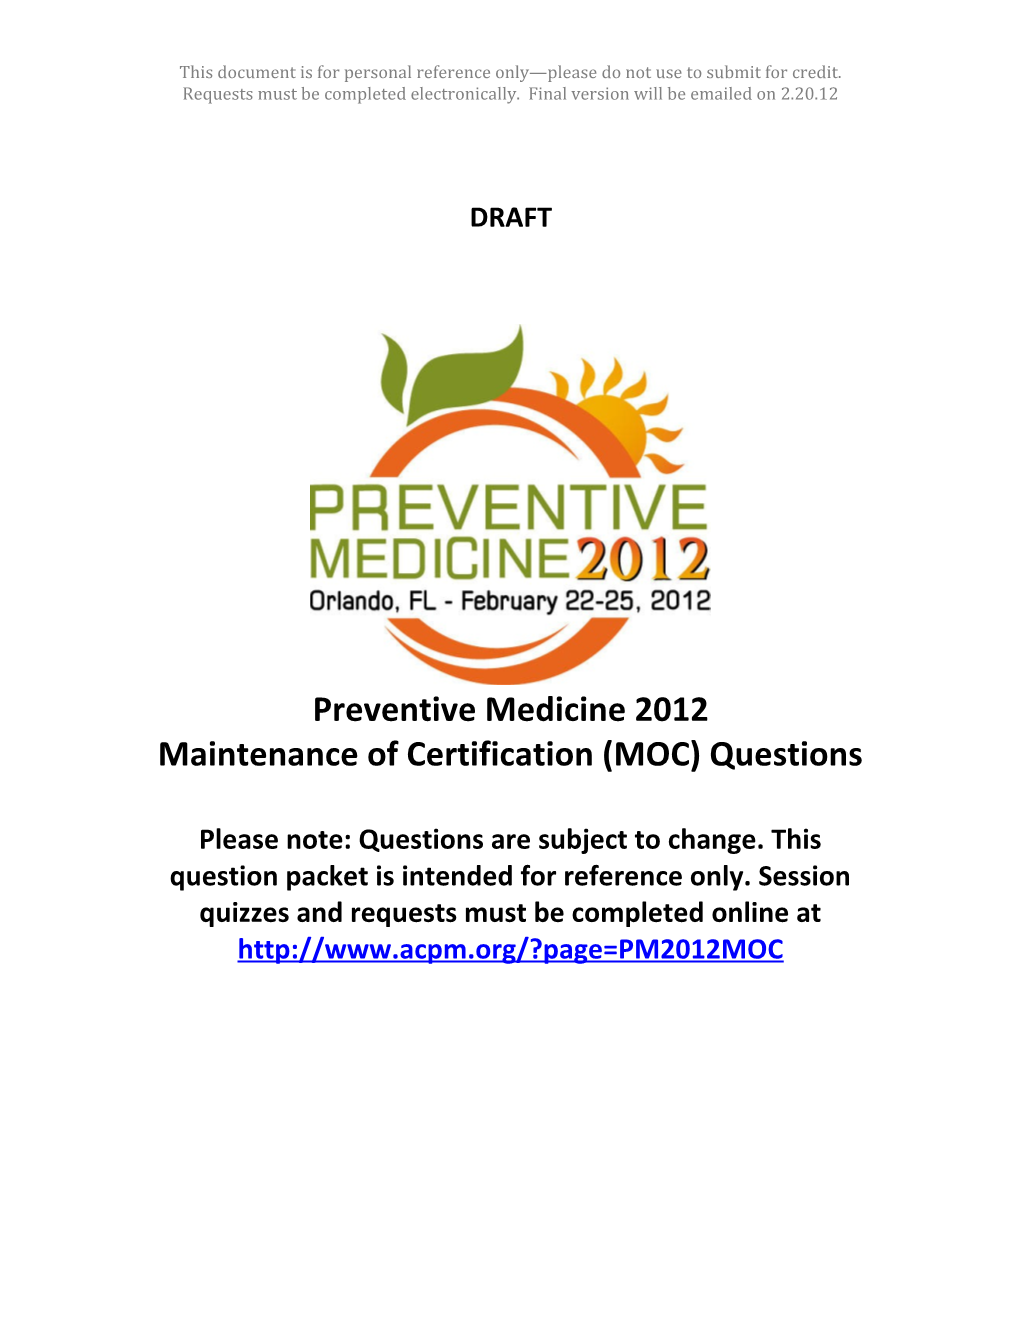 Maintenance of Certification (MOC) Questions